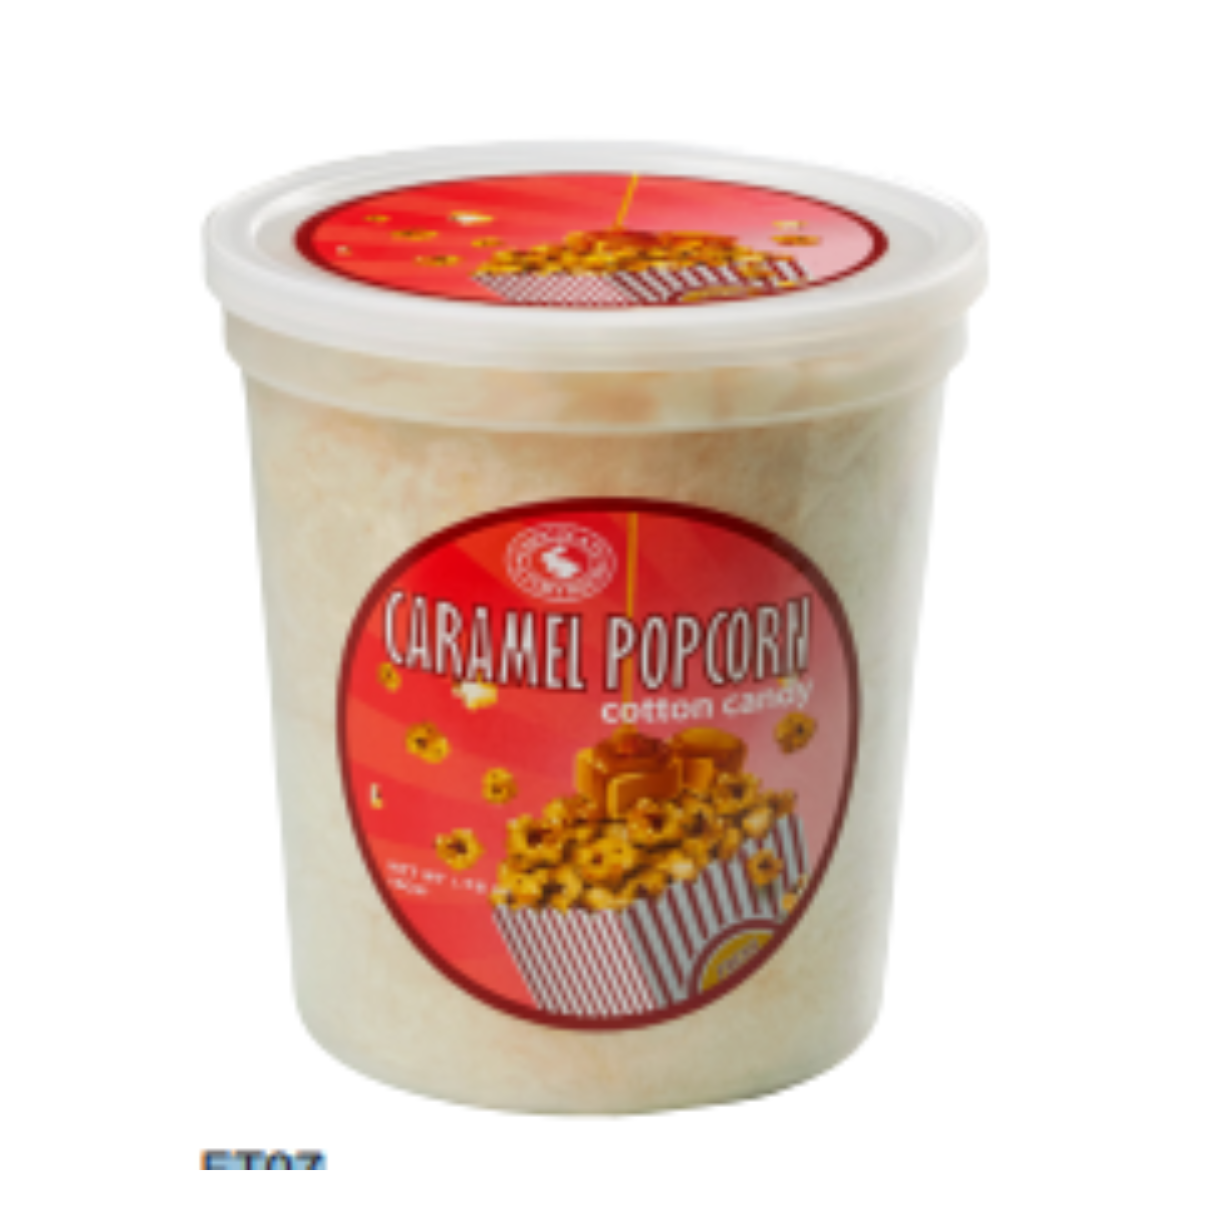 Caramel Popcorn Cotton Candy 1.75oz - 12ct